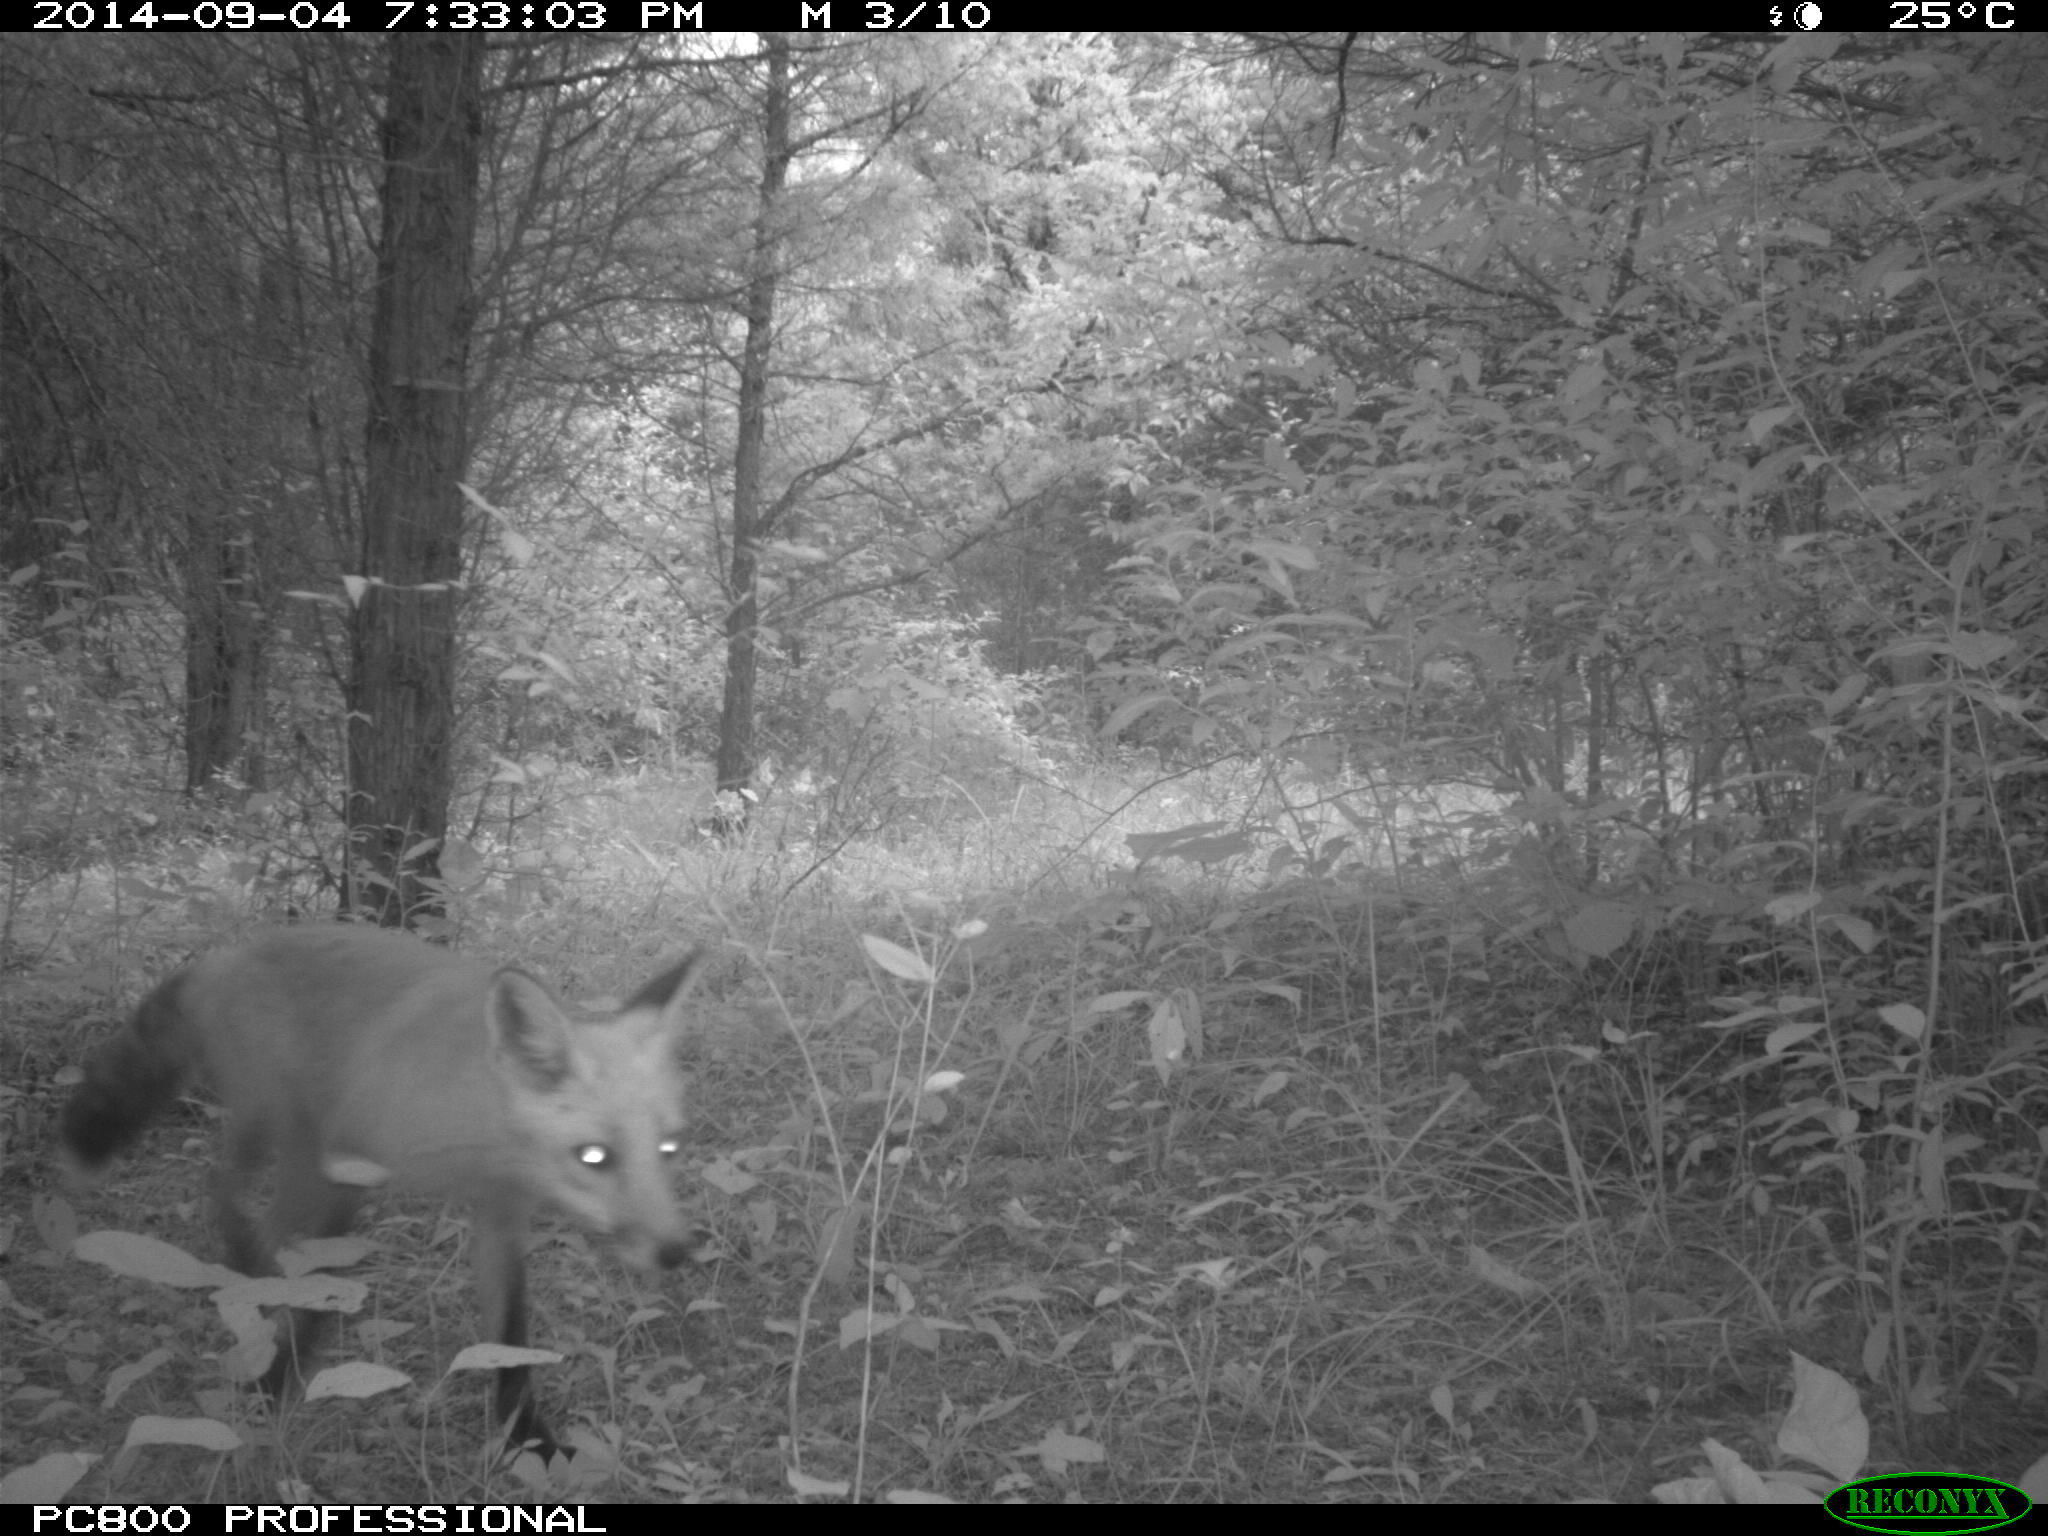 Image of fox, red fox